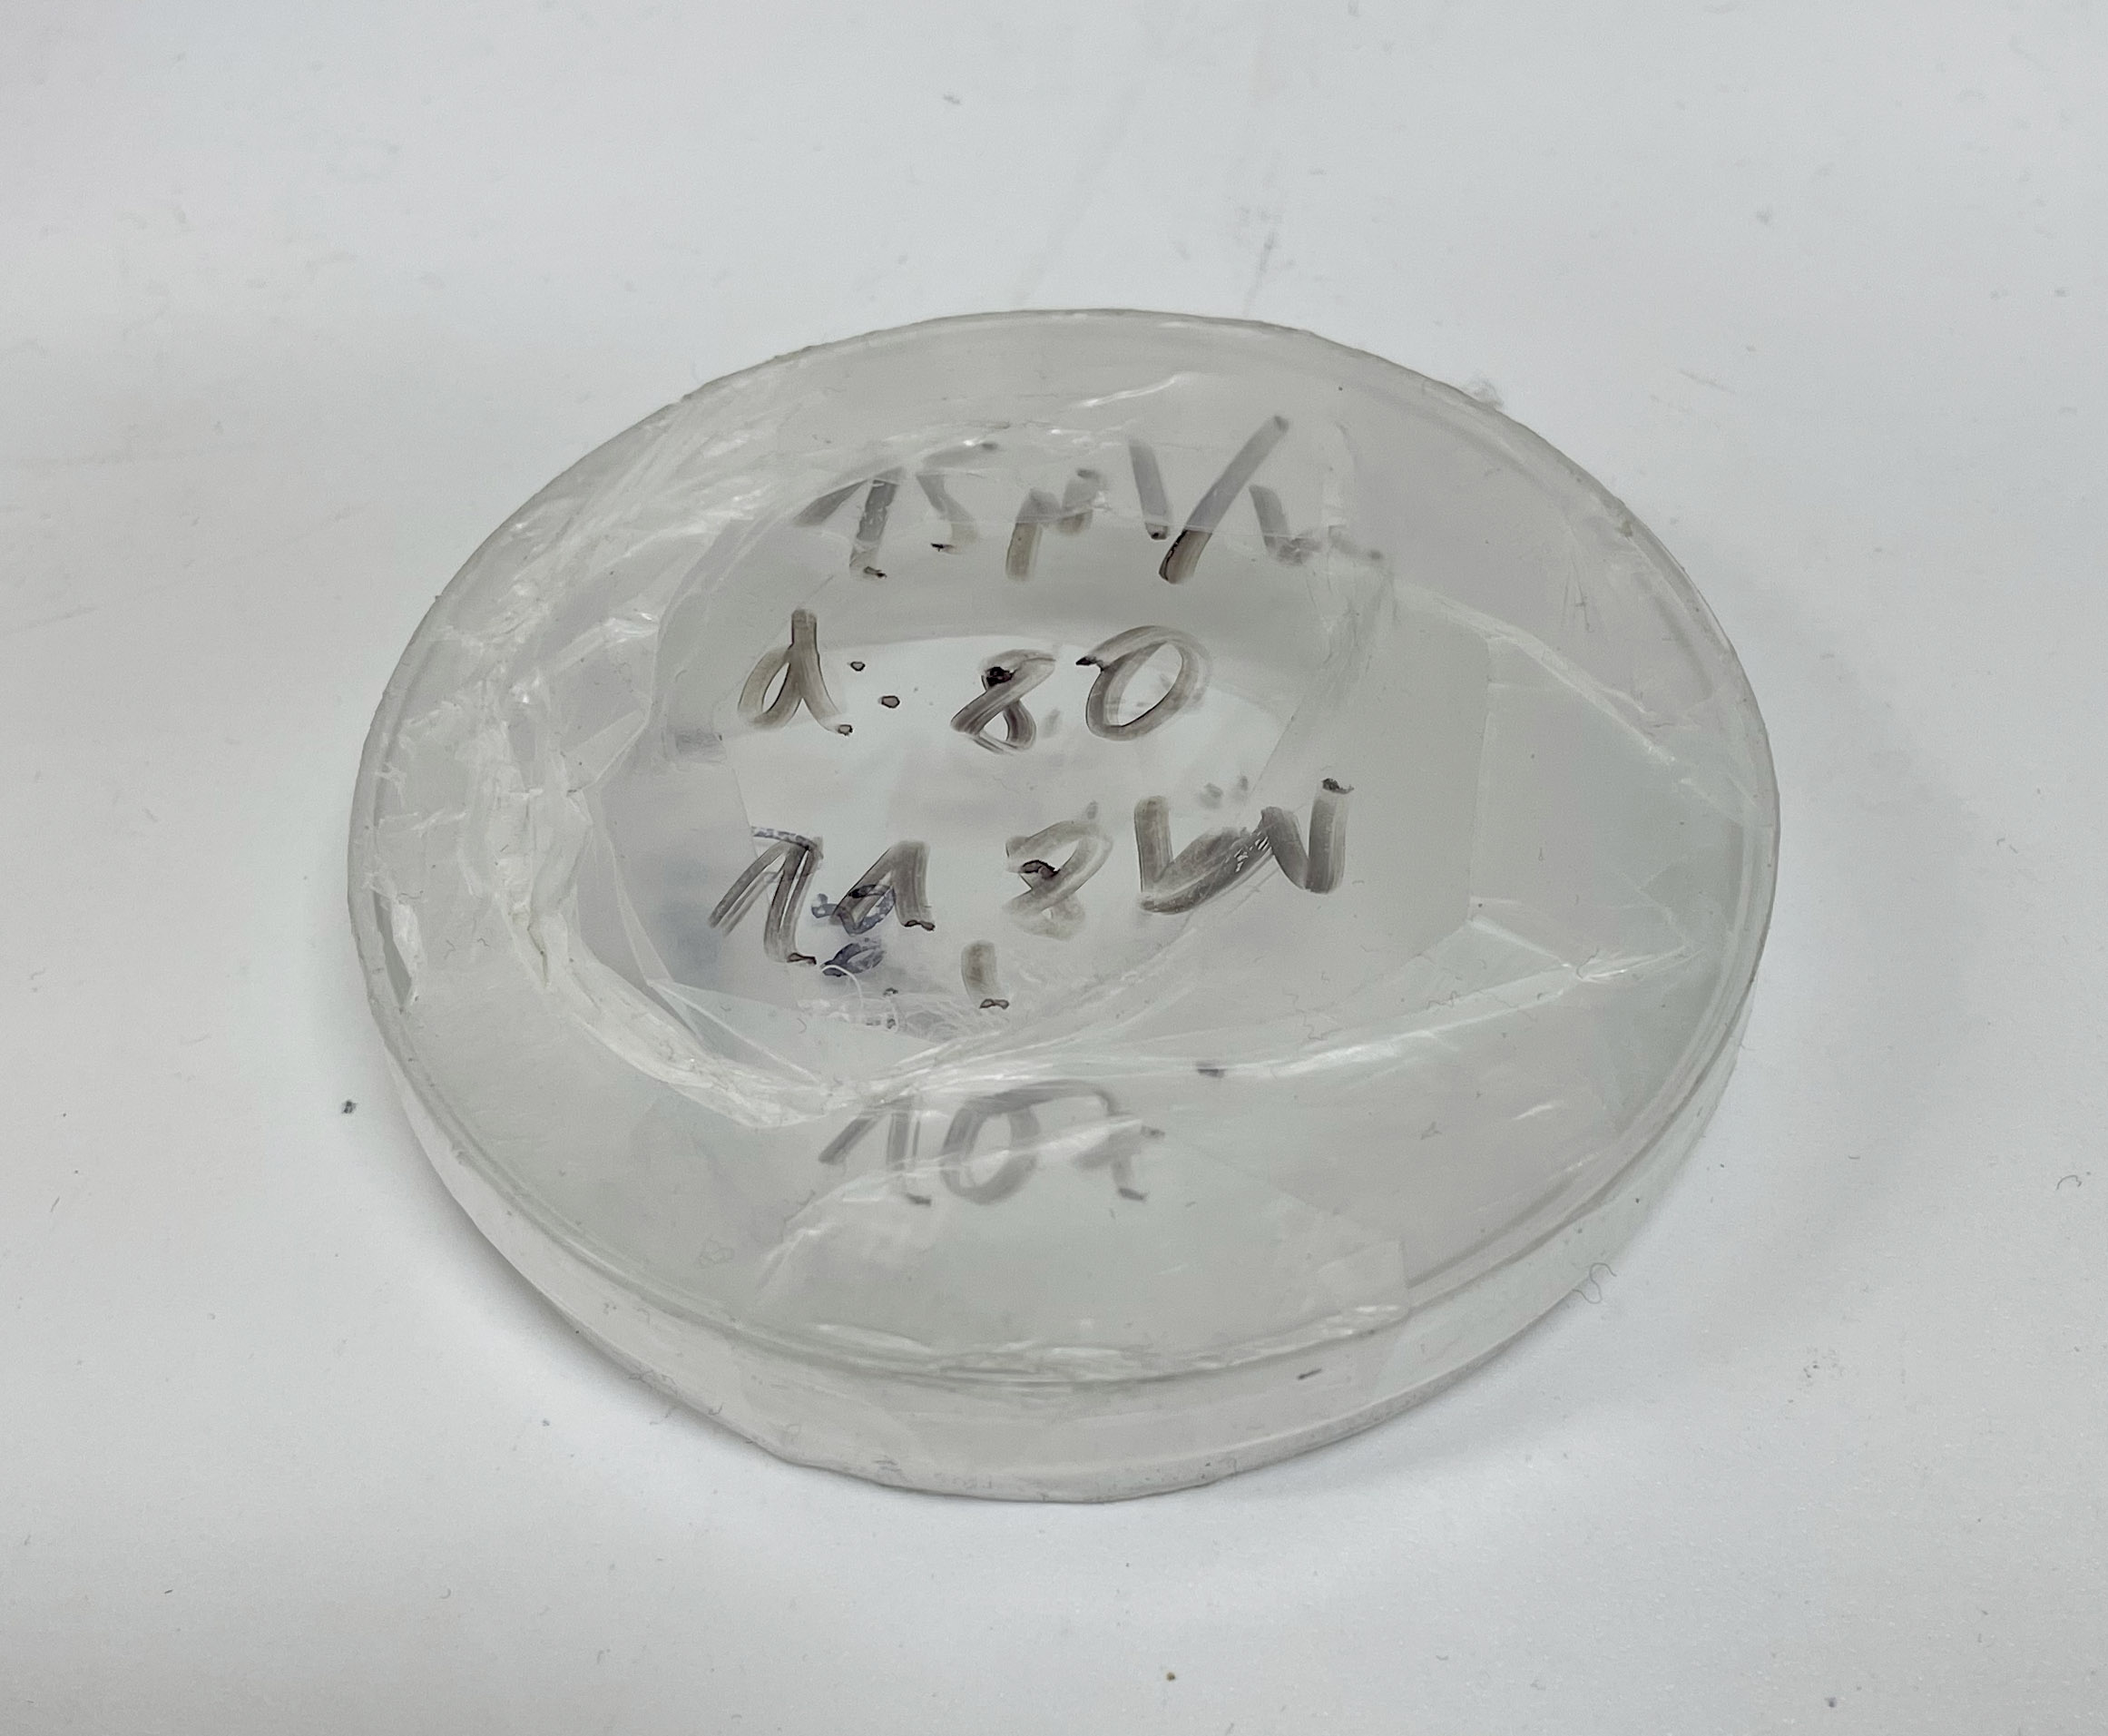 Scaffolds in Petri Dish